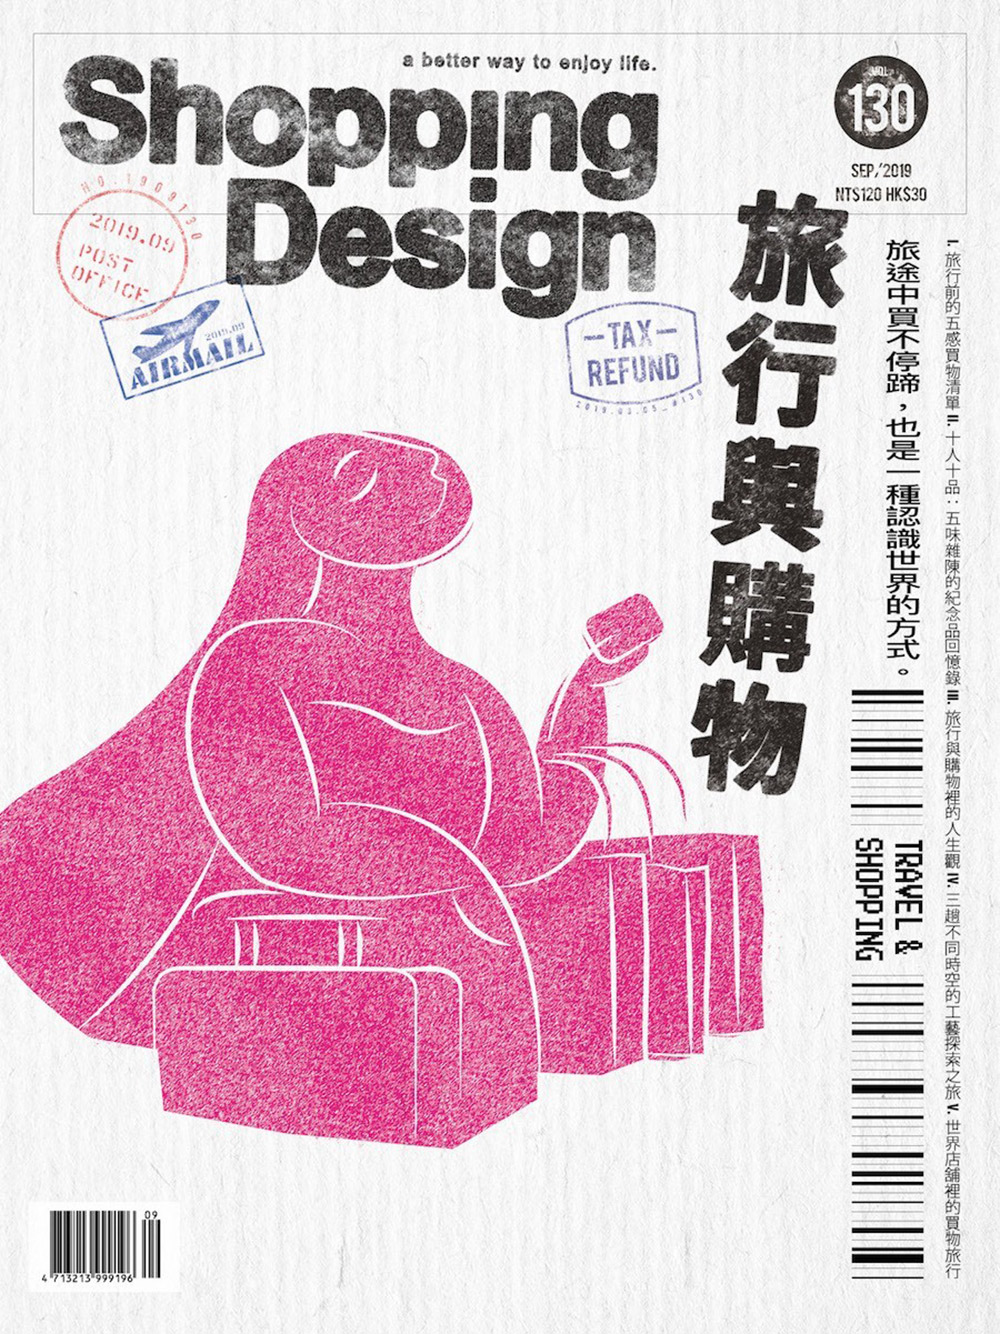 《Shopping Design》杂志封面欣赏